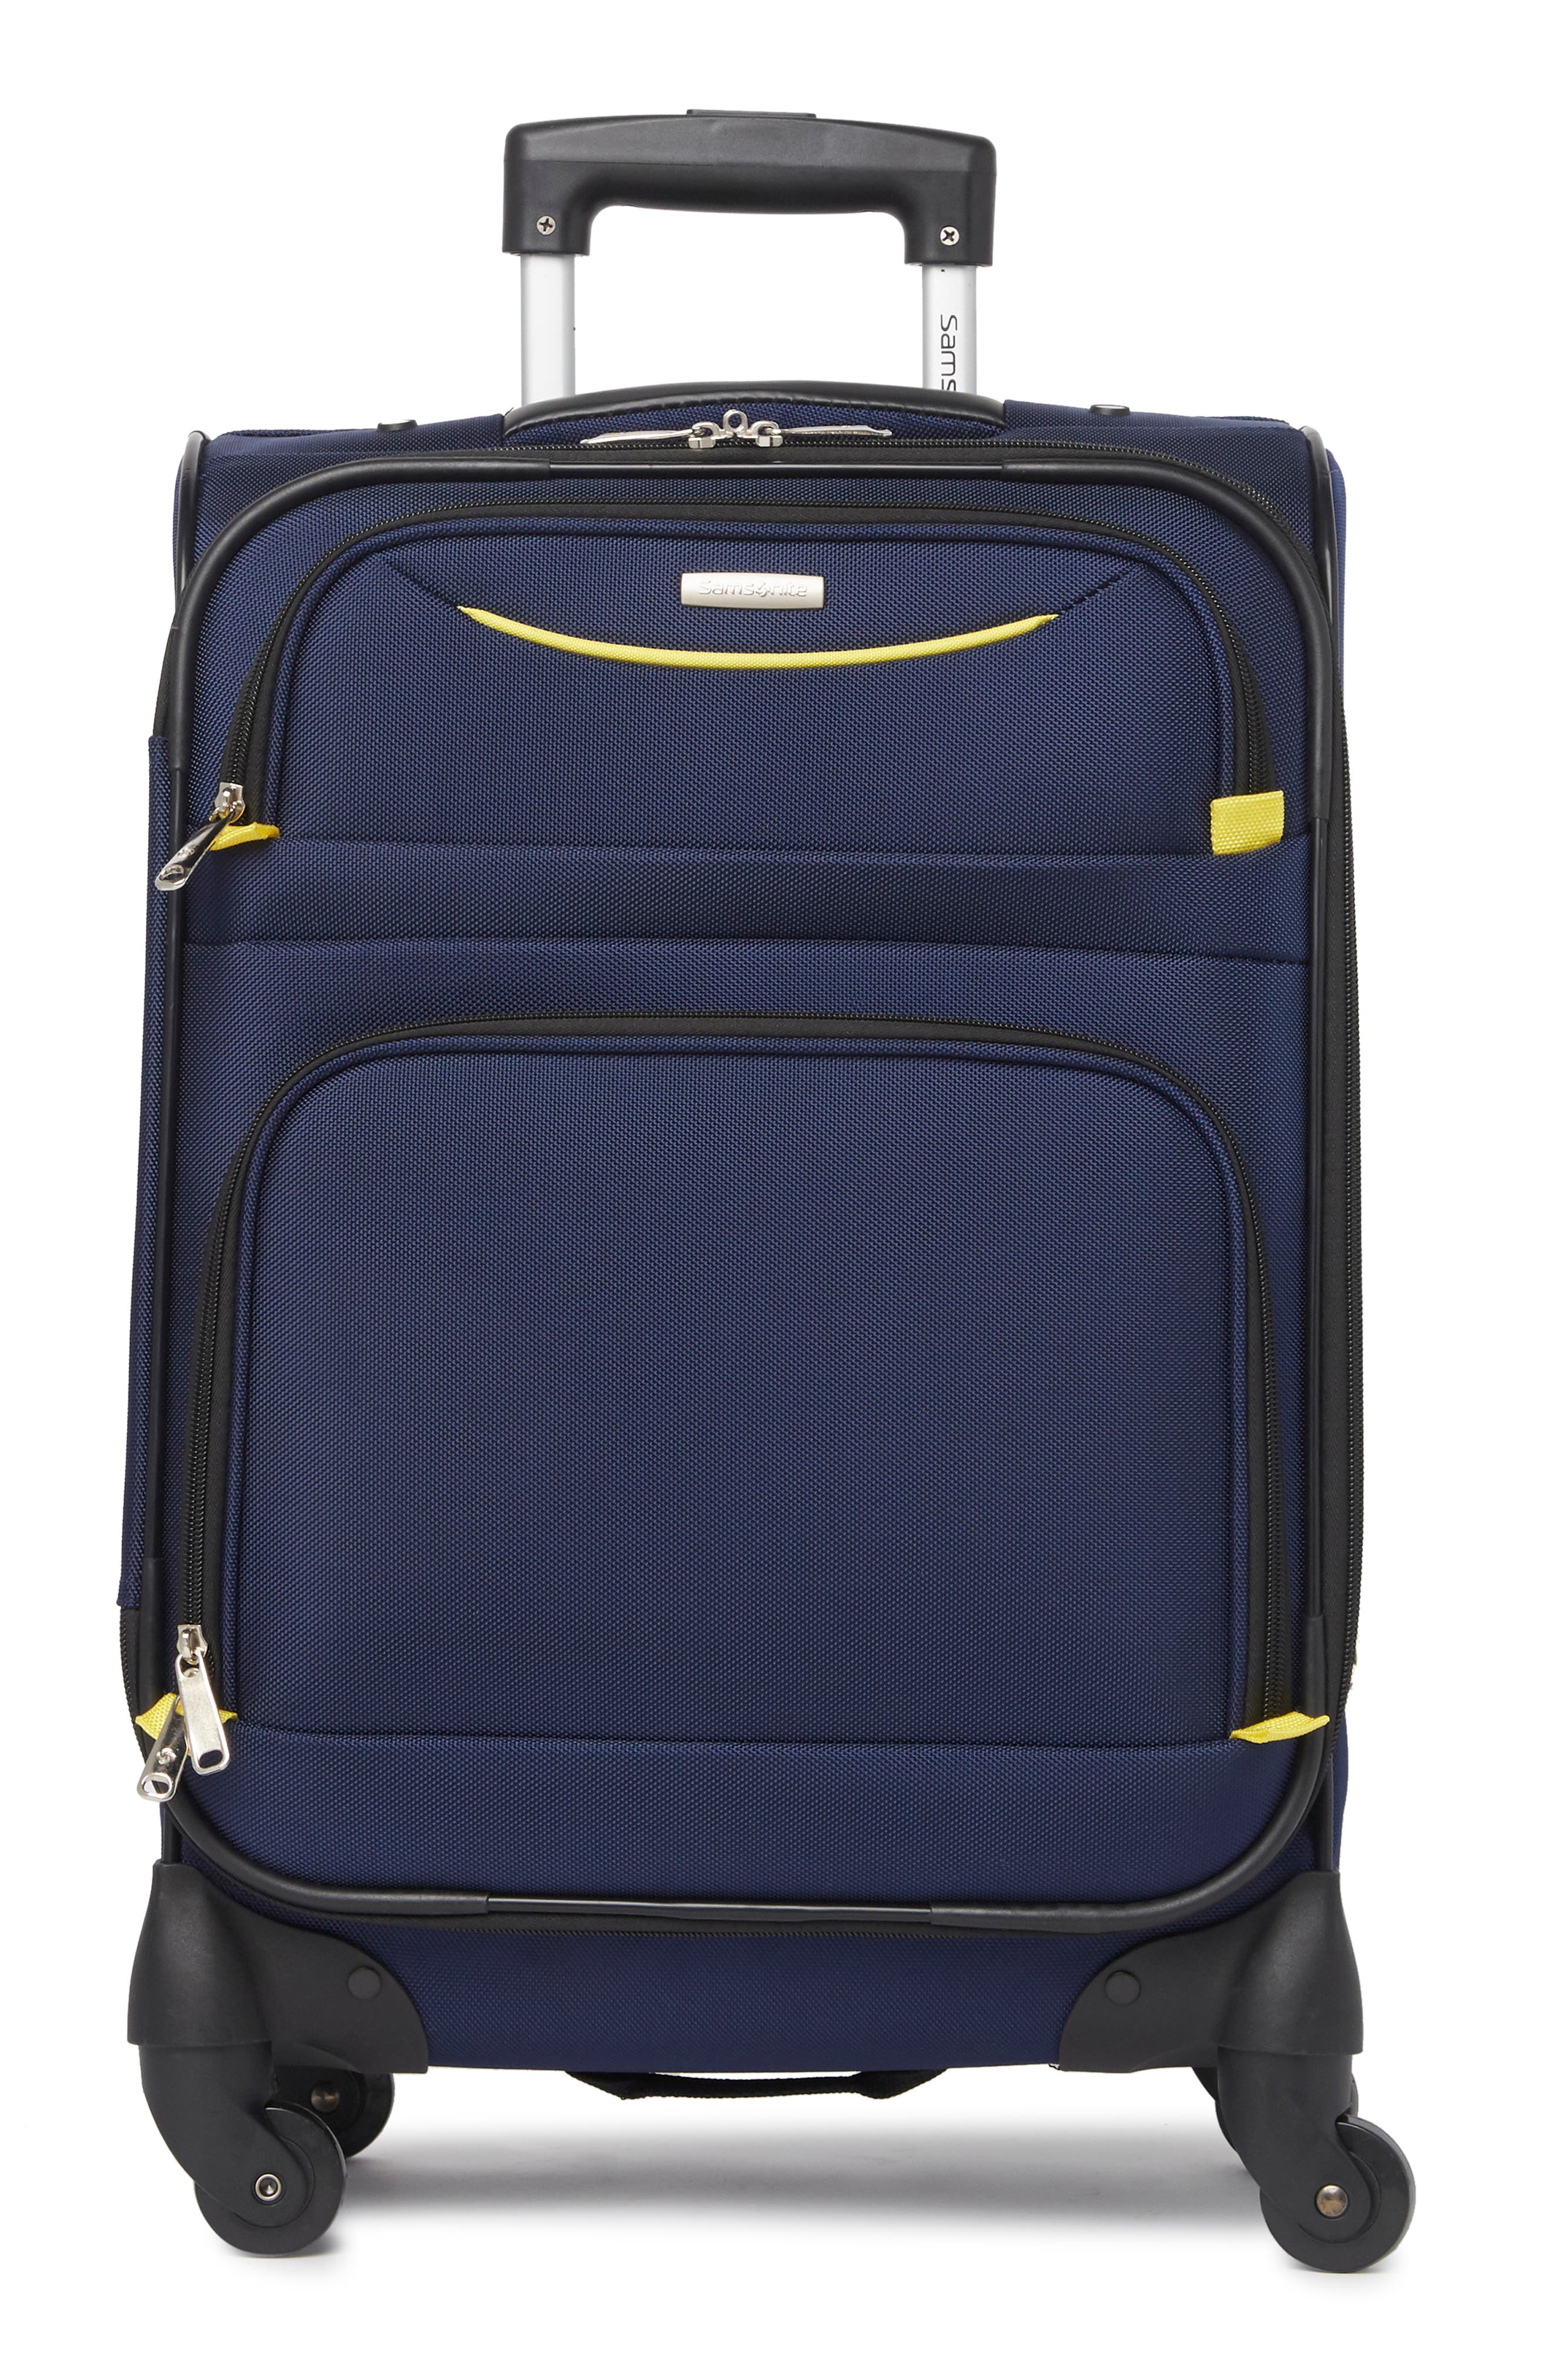 Samsonite 21" Spinner Suitcase In Navy/yellow